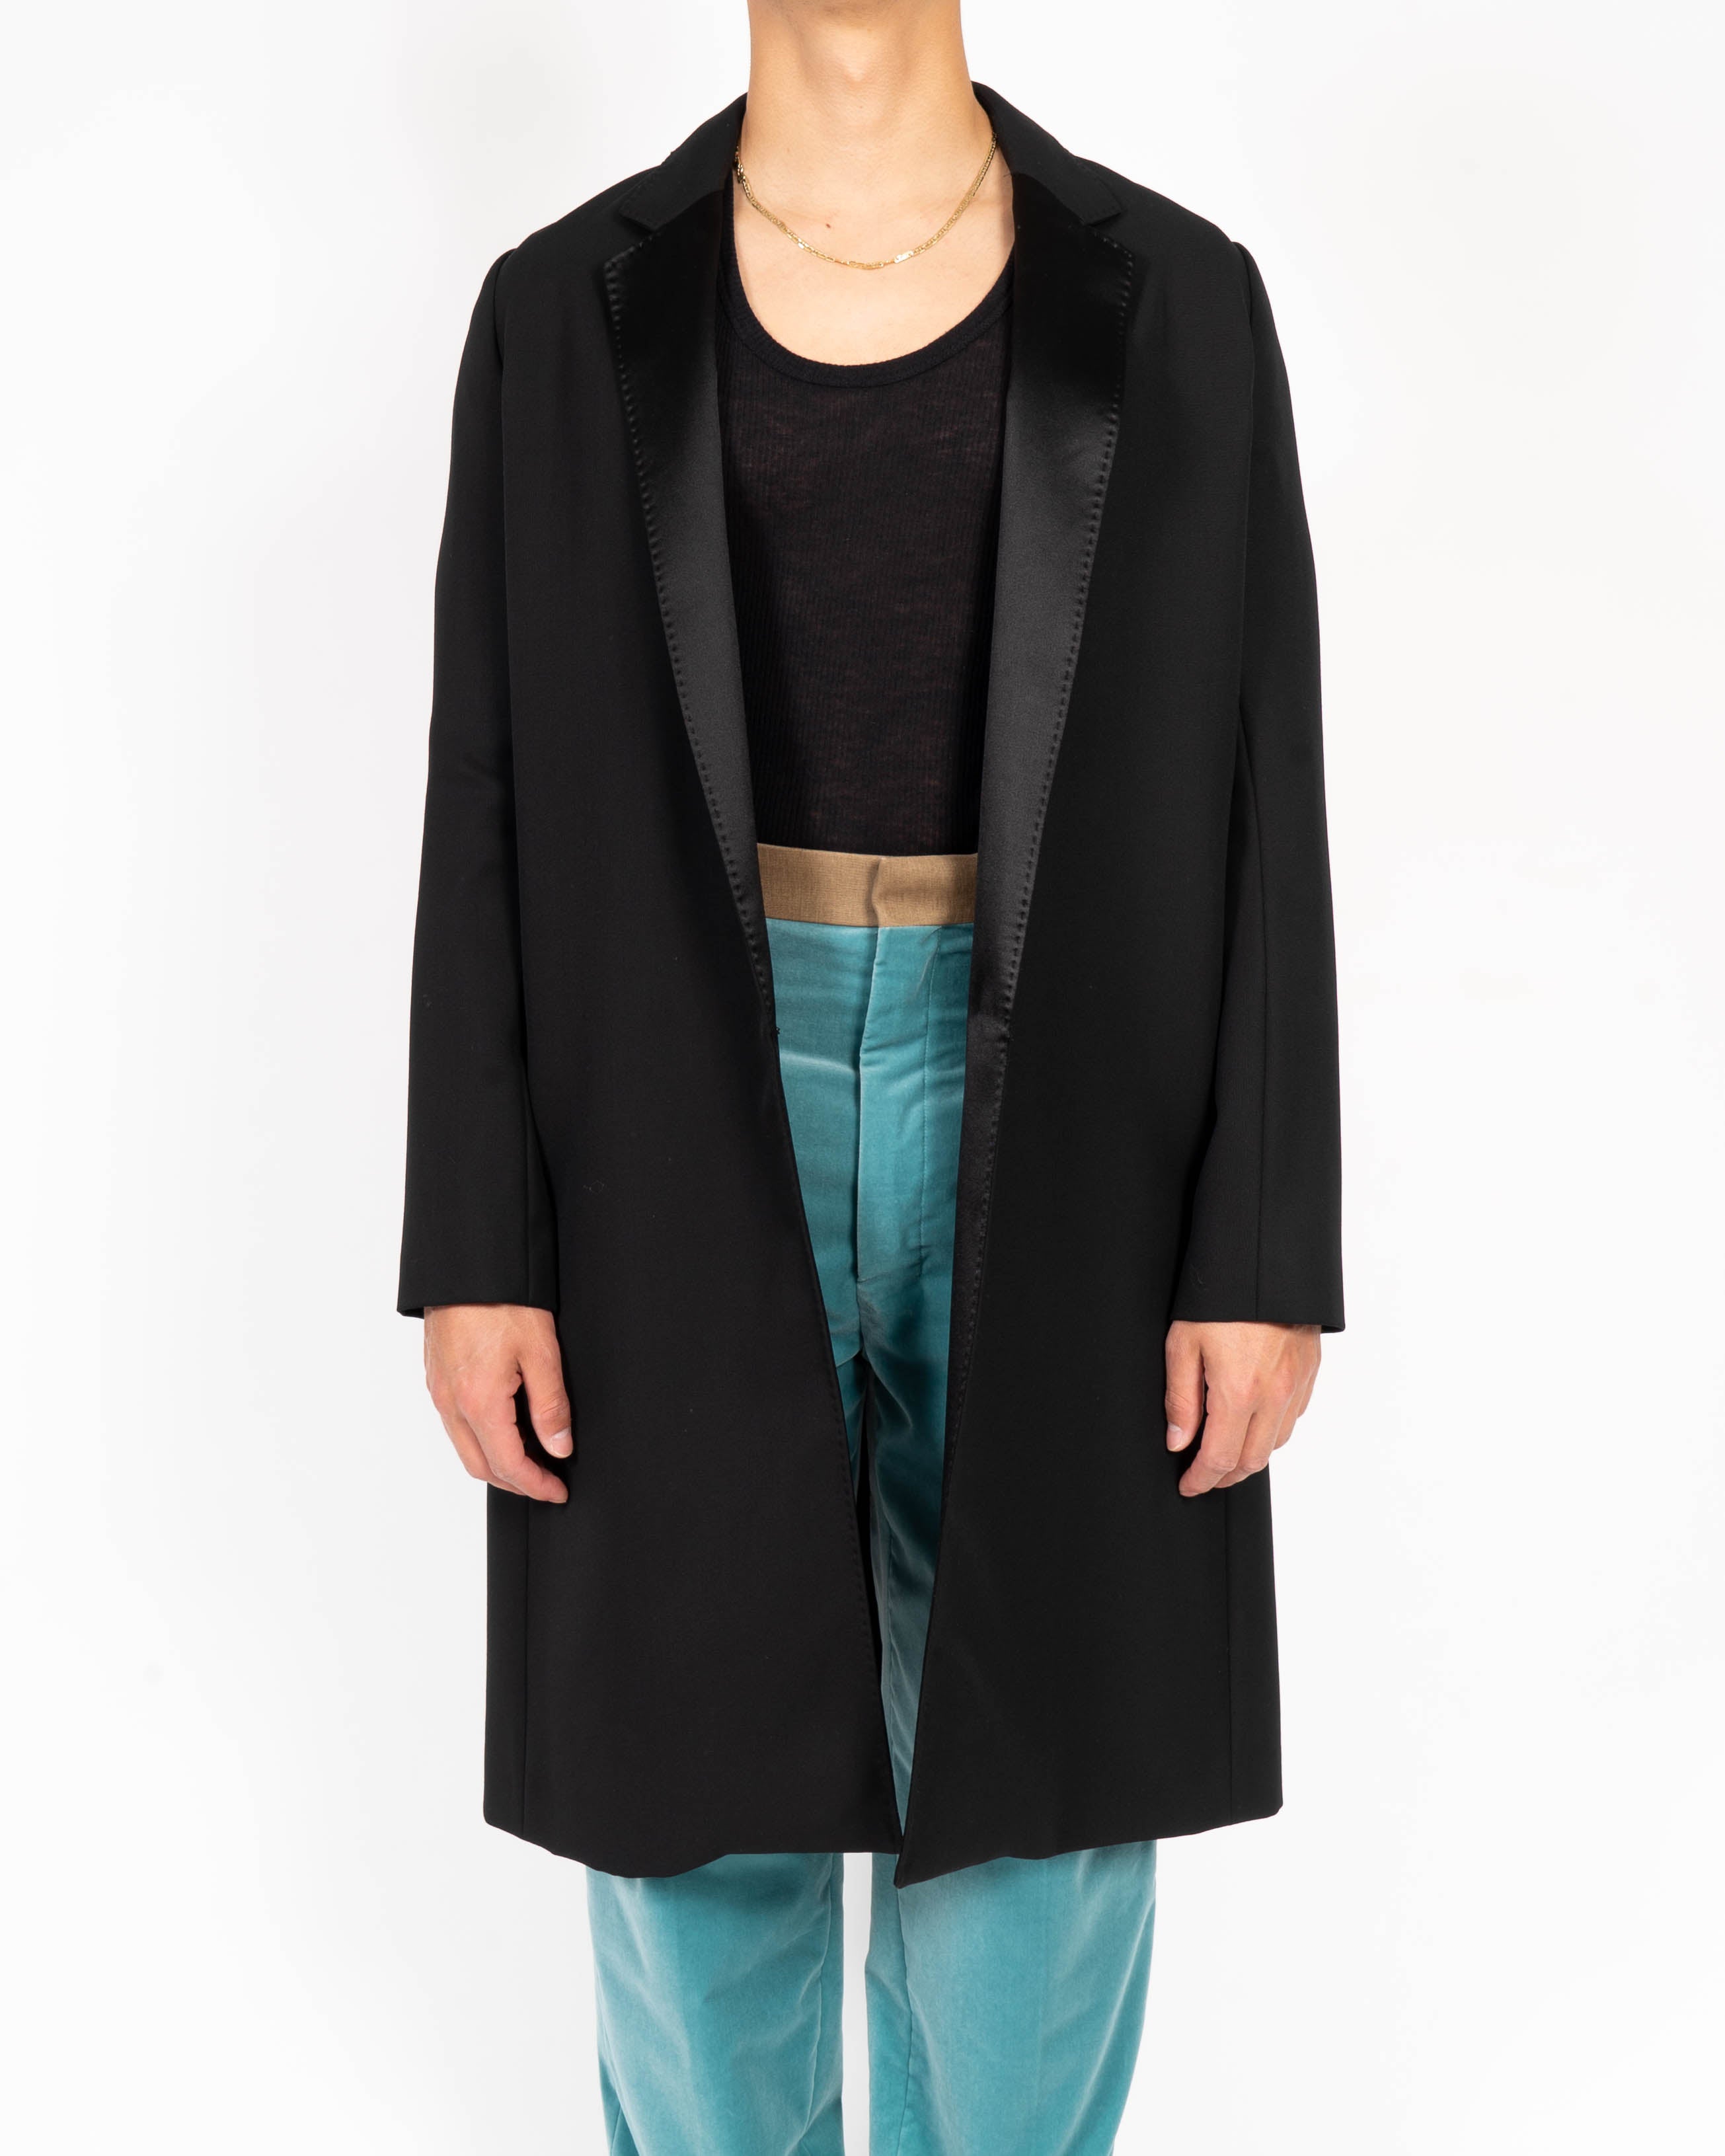 SS17 Black Satin Collar Overcoat in fine Black Wool